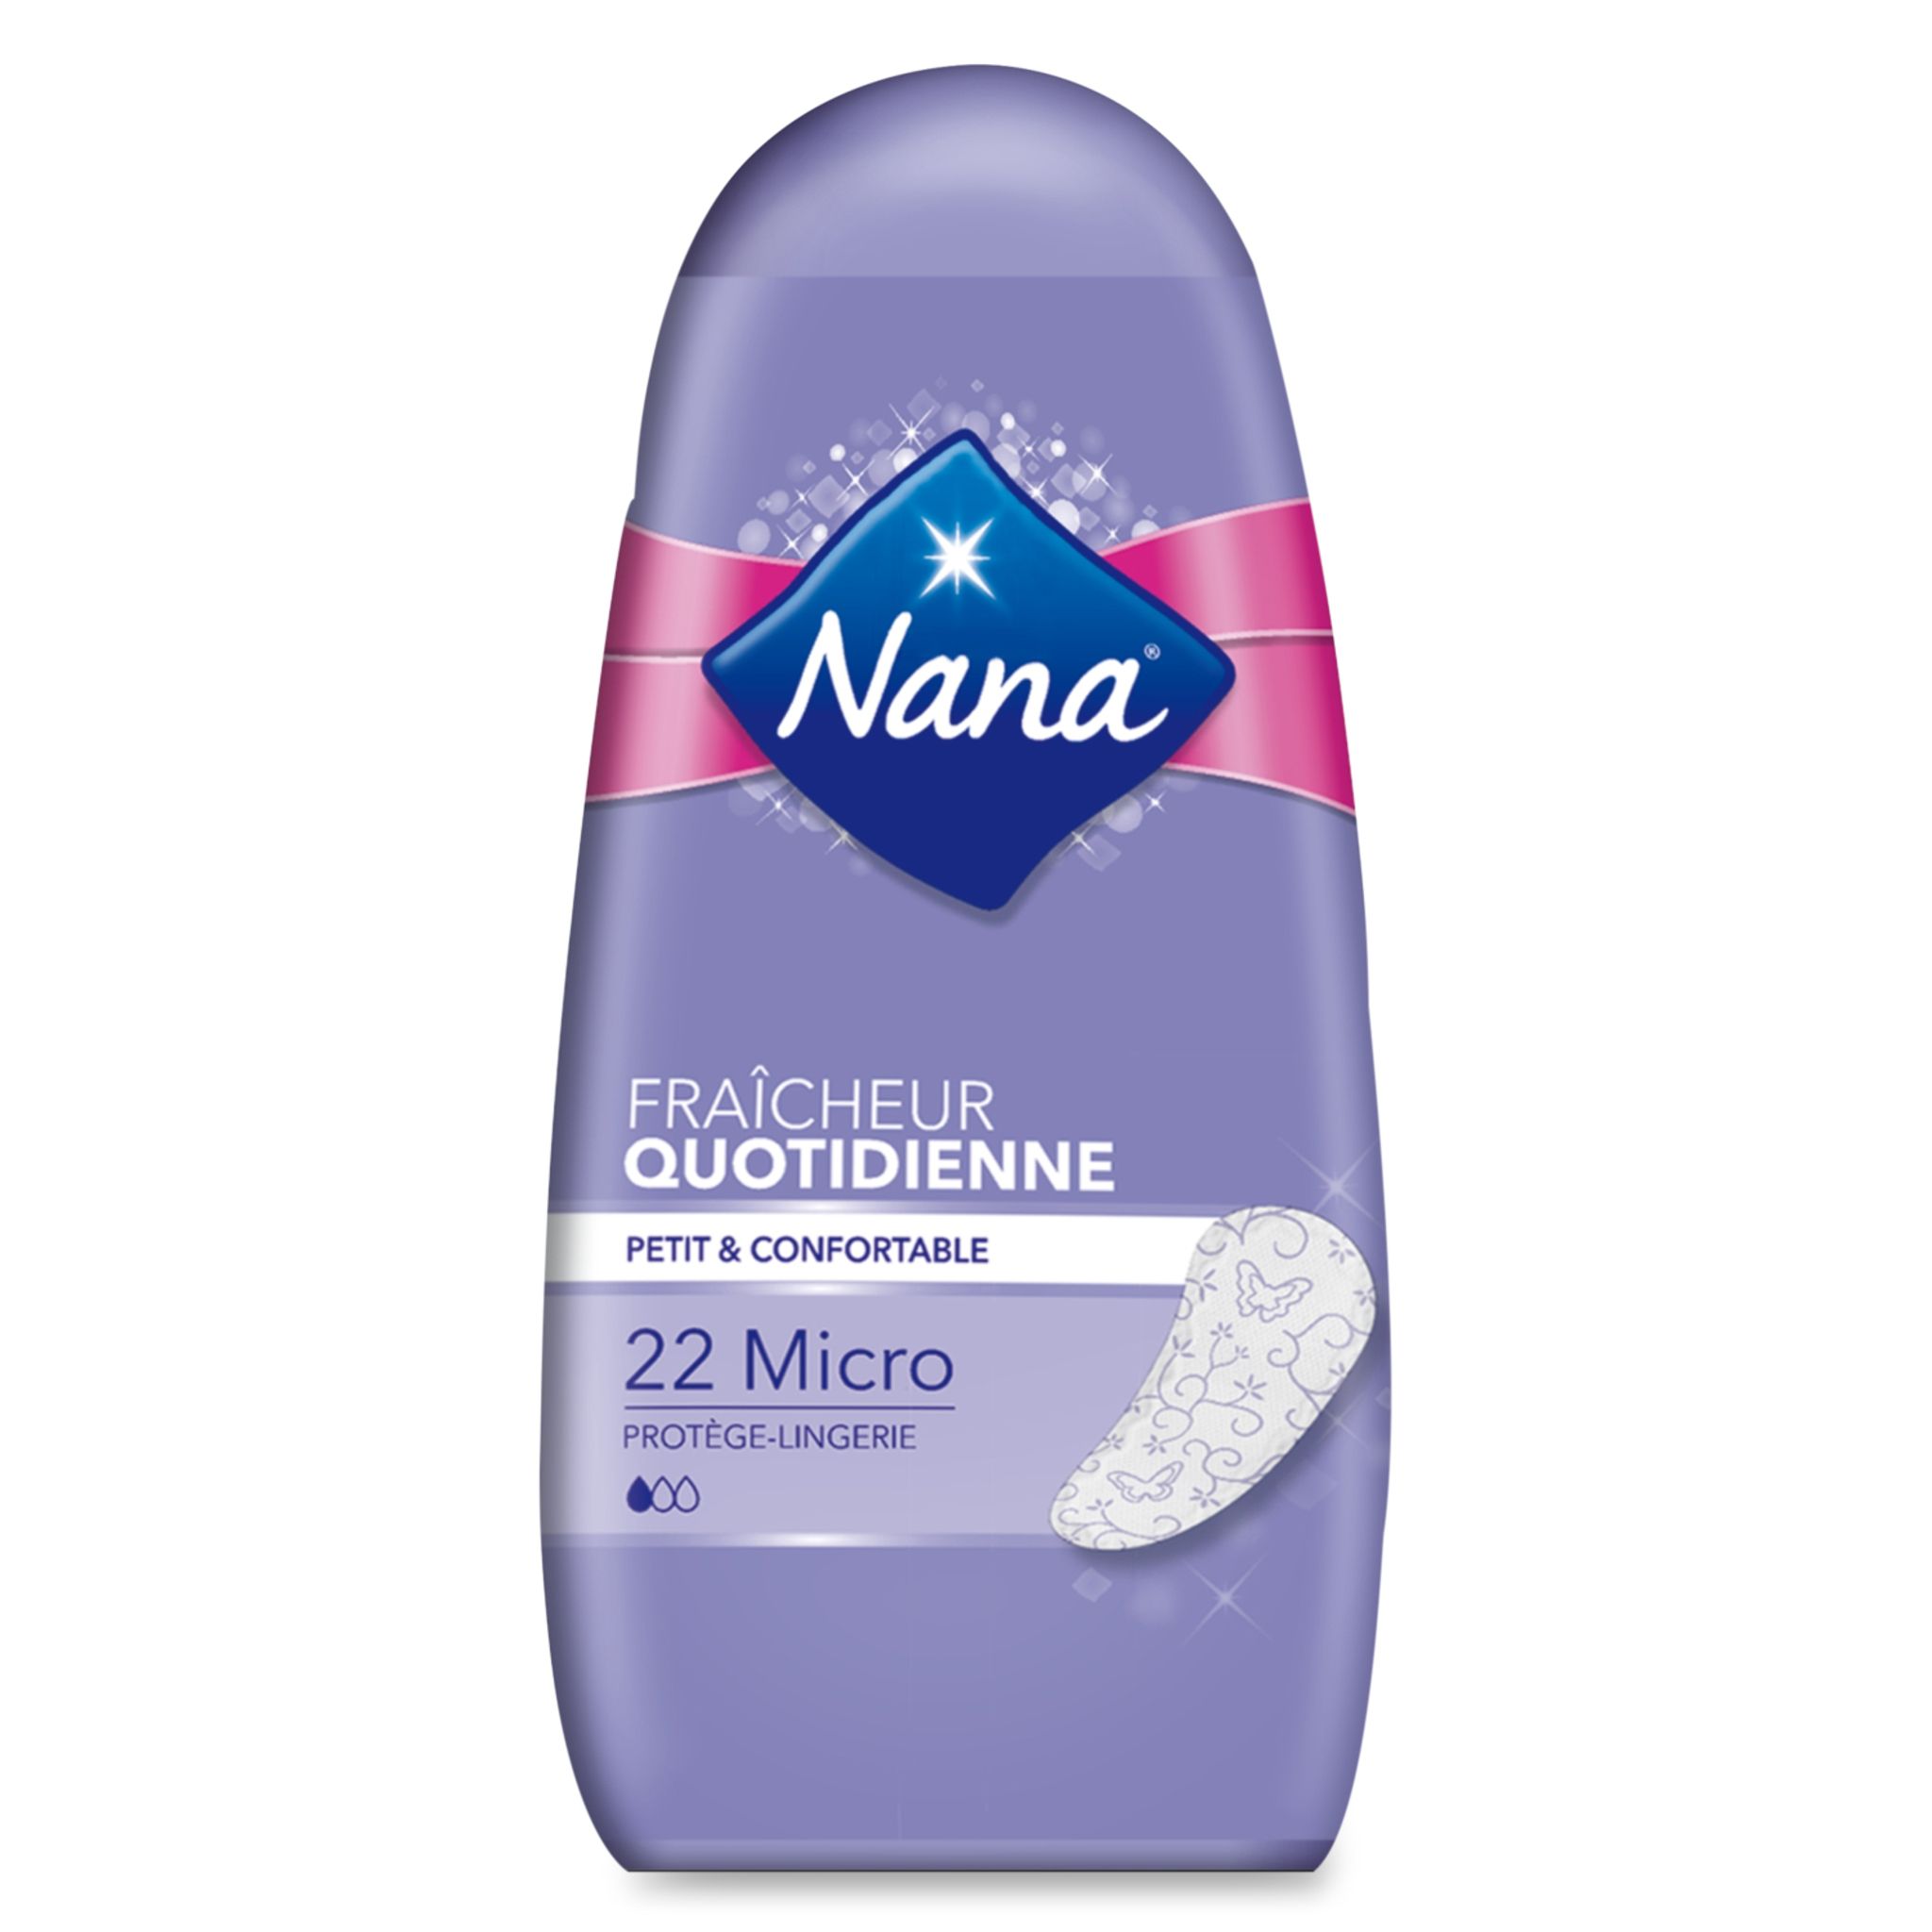 NANA Nana protège lingerie micro fraîcheur quotidienne x22 pas